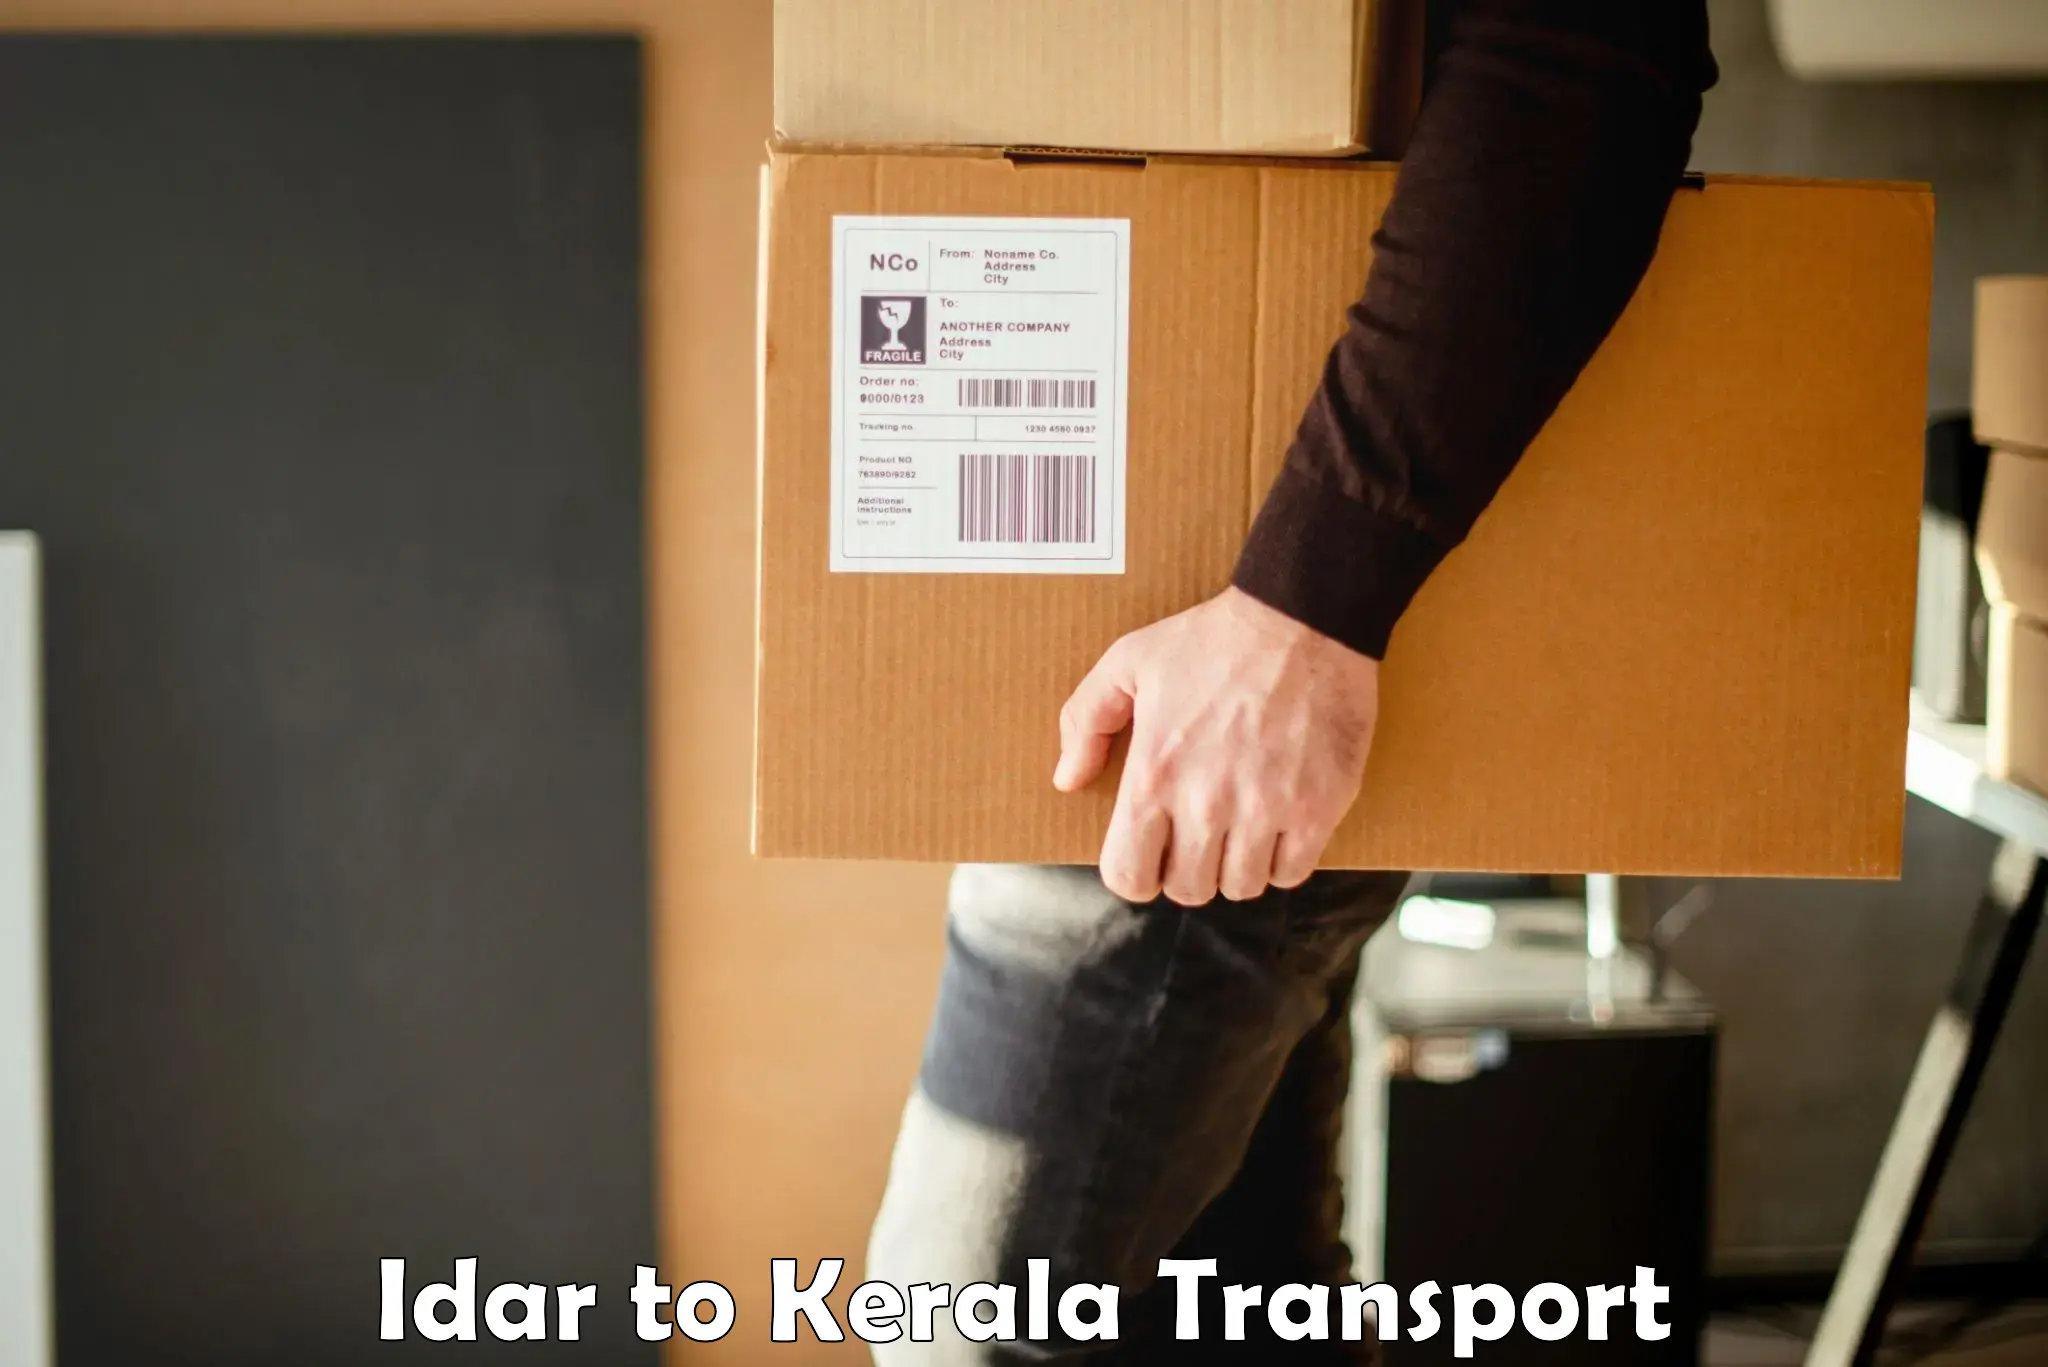 Shipping partner Idar to Kerala